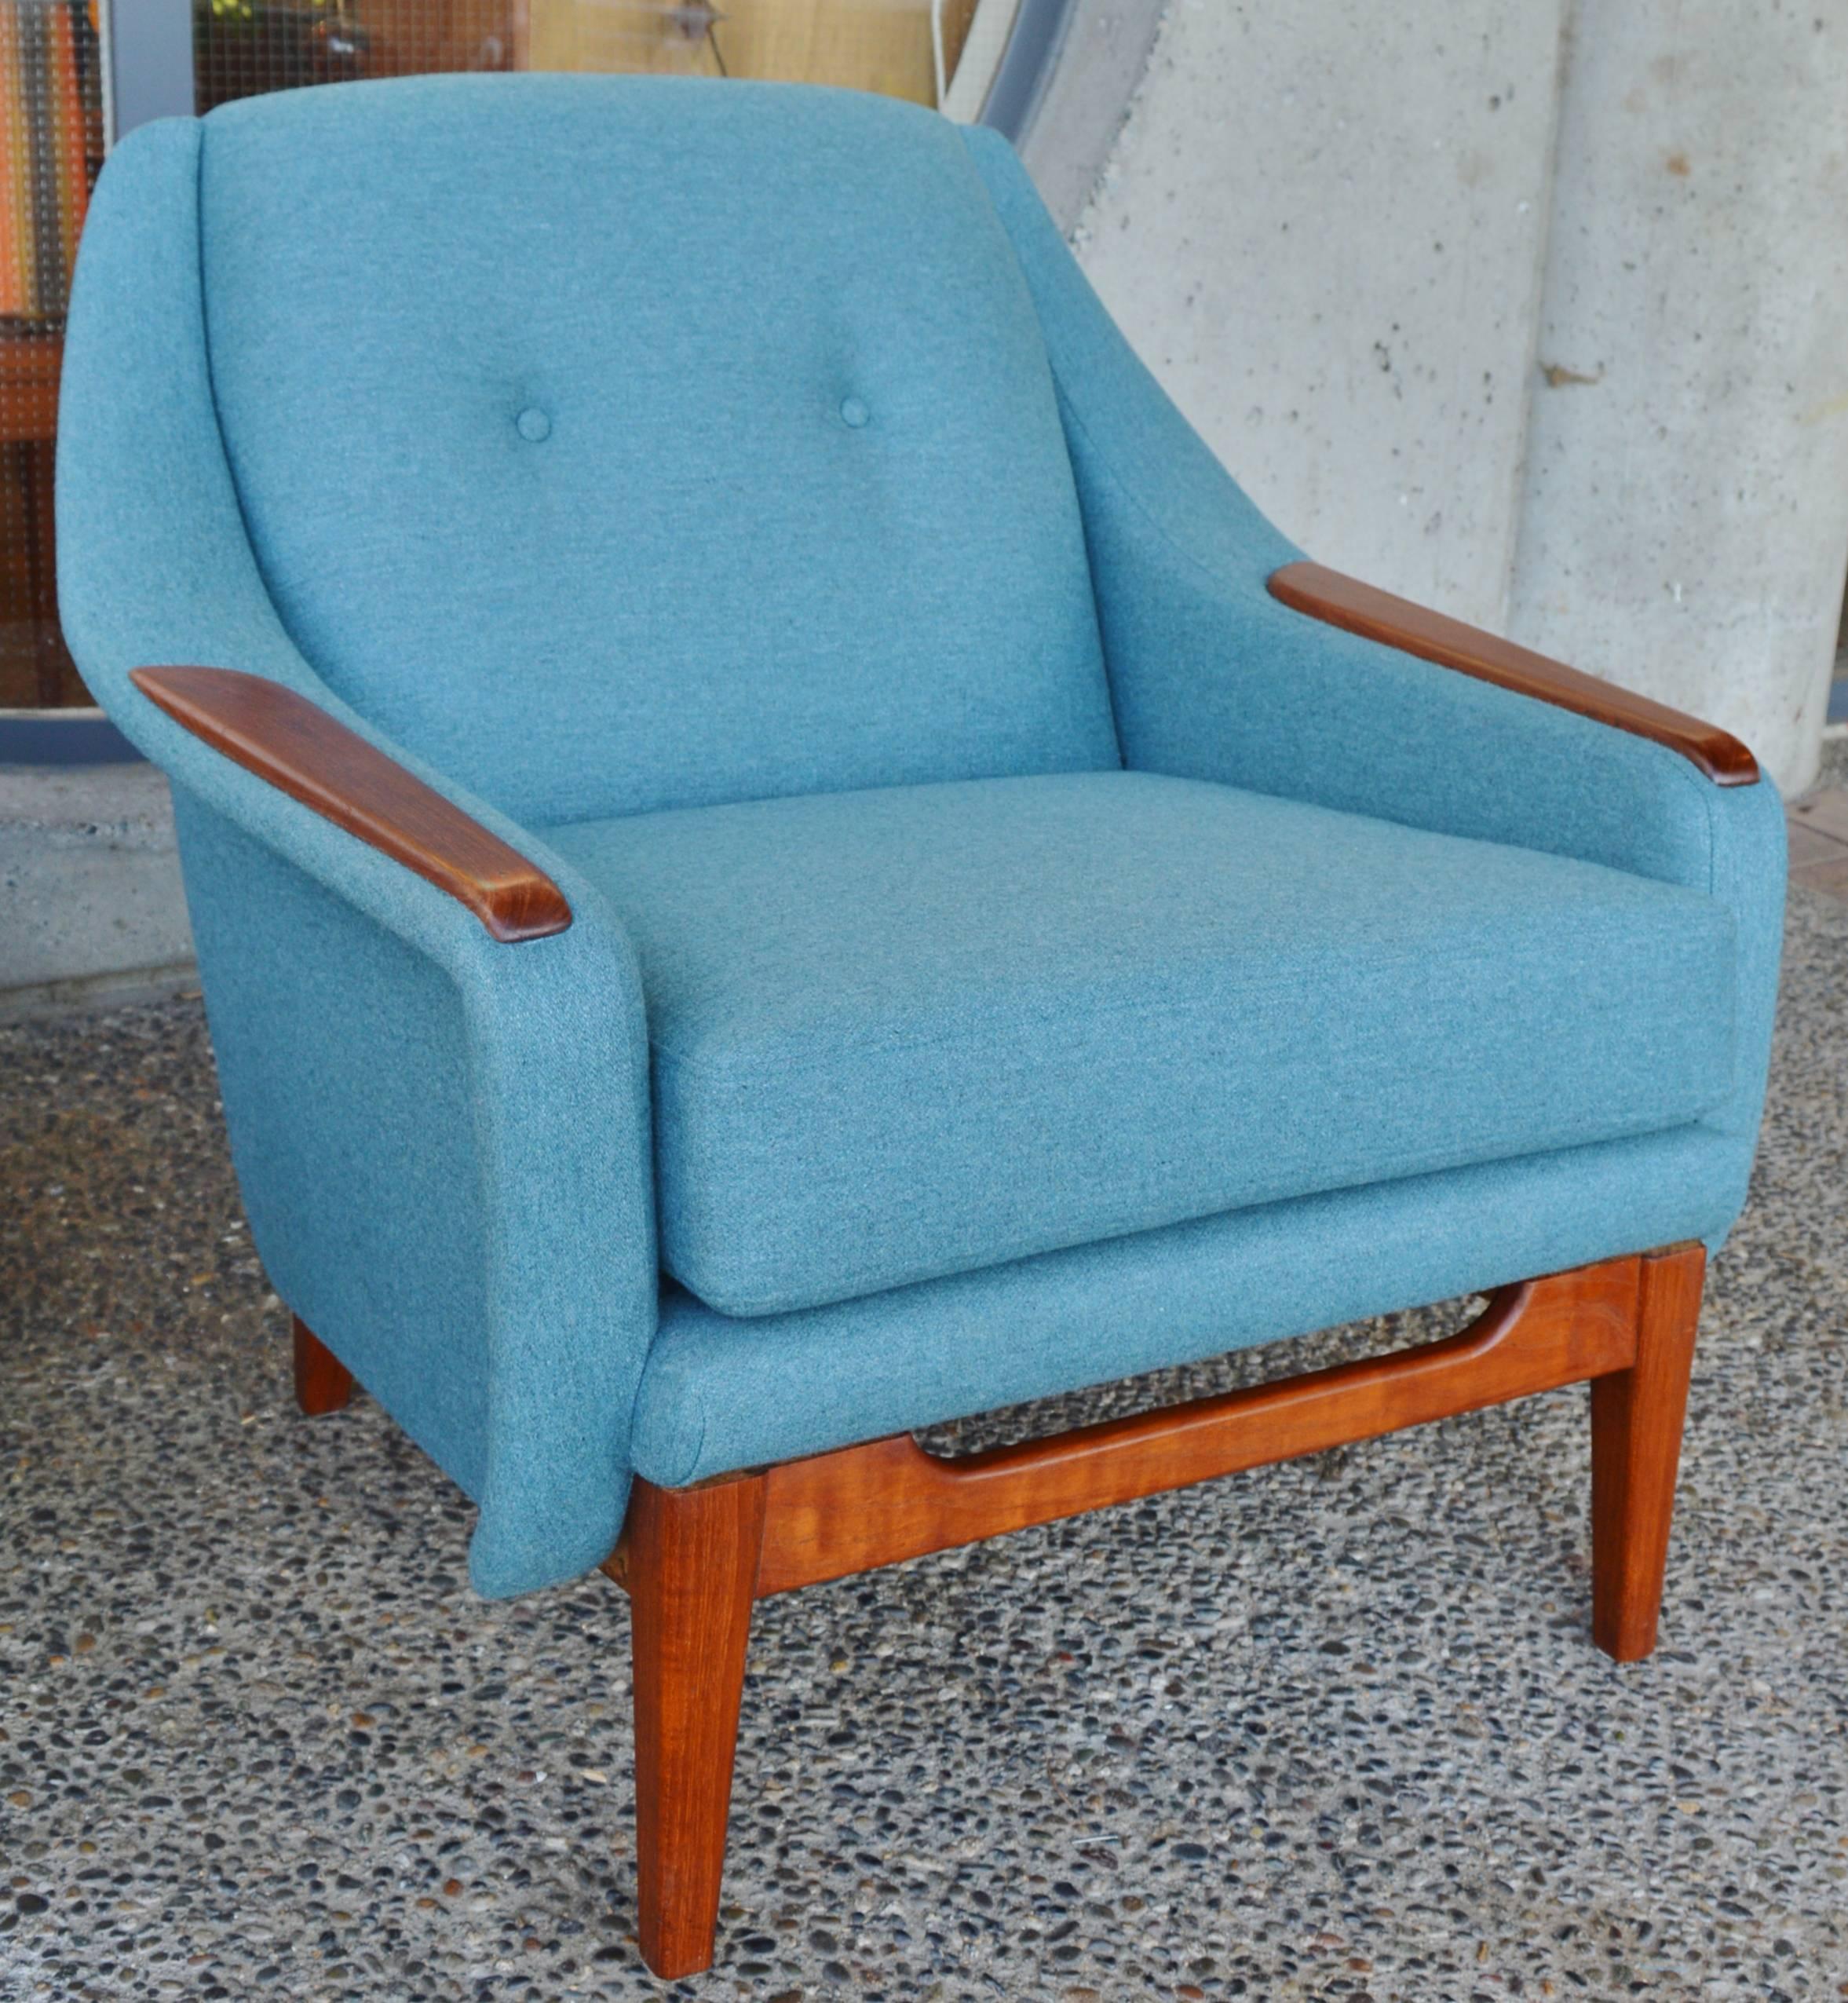 Mid-Century Modern Scandinavian Teak Sofa and Lounge Chair in Blue Wool